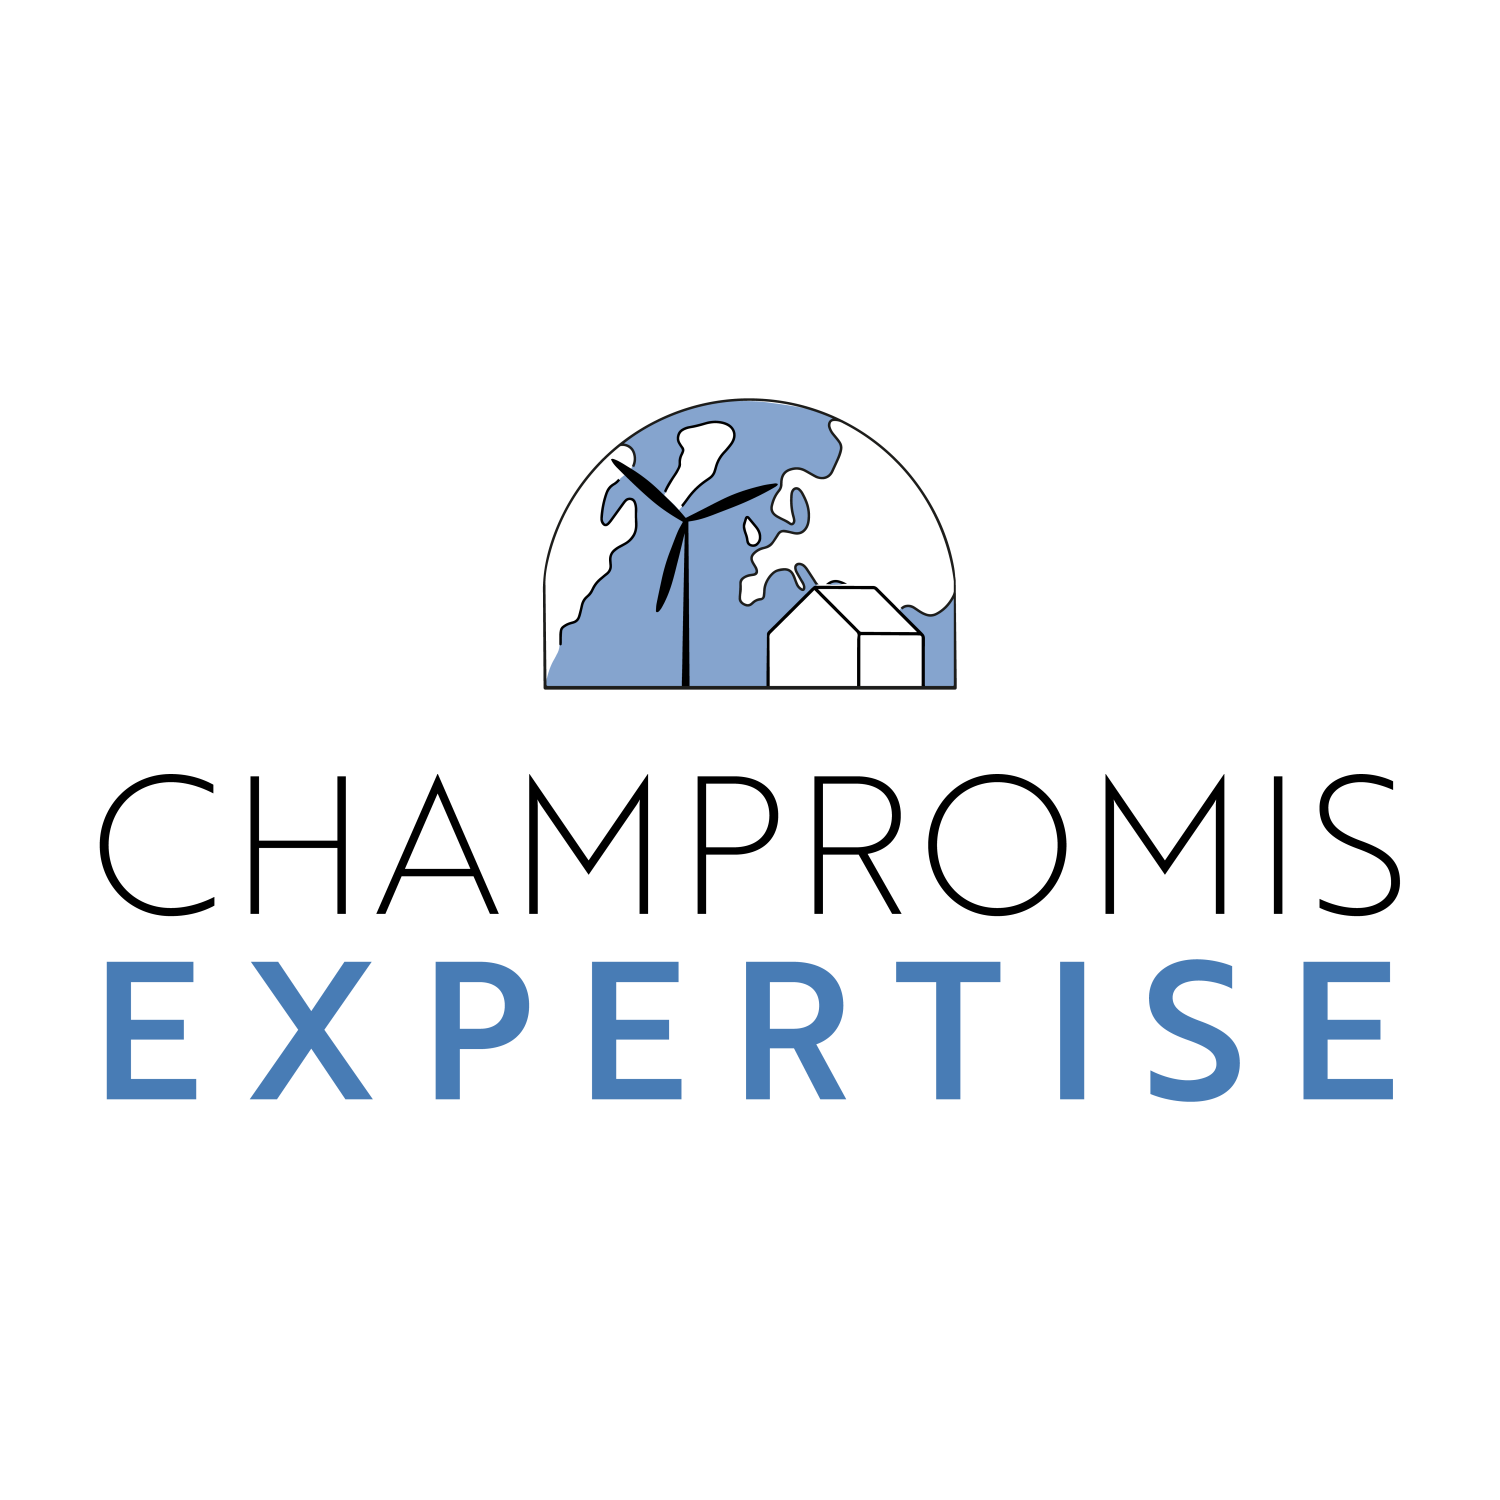 Champromis Expertise